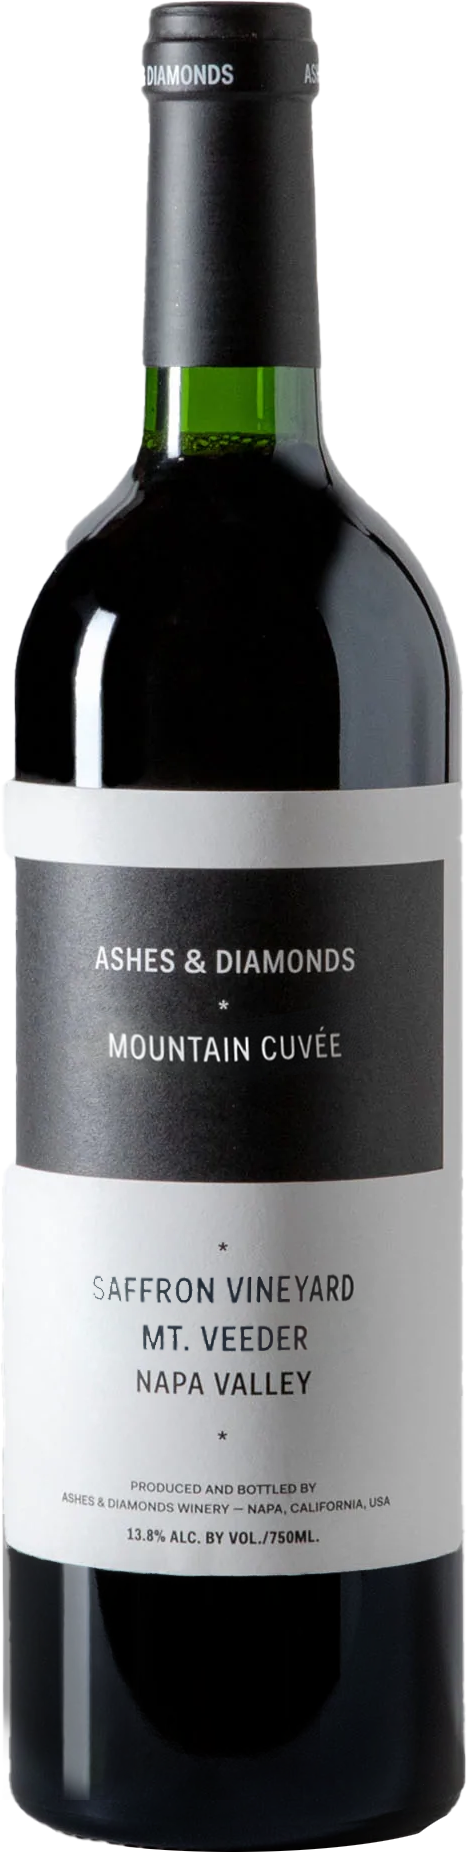 Ashes & Diamonds Napa Valley Saffron Vineyard Mountain Cuvée No.4 2019